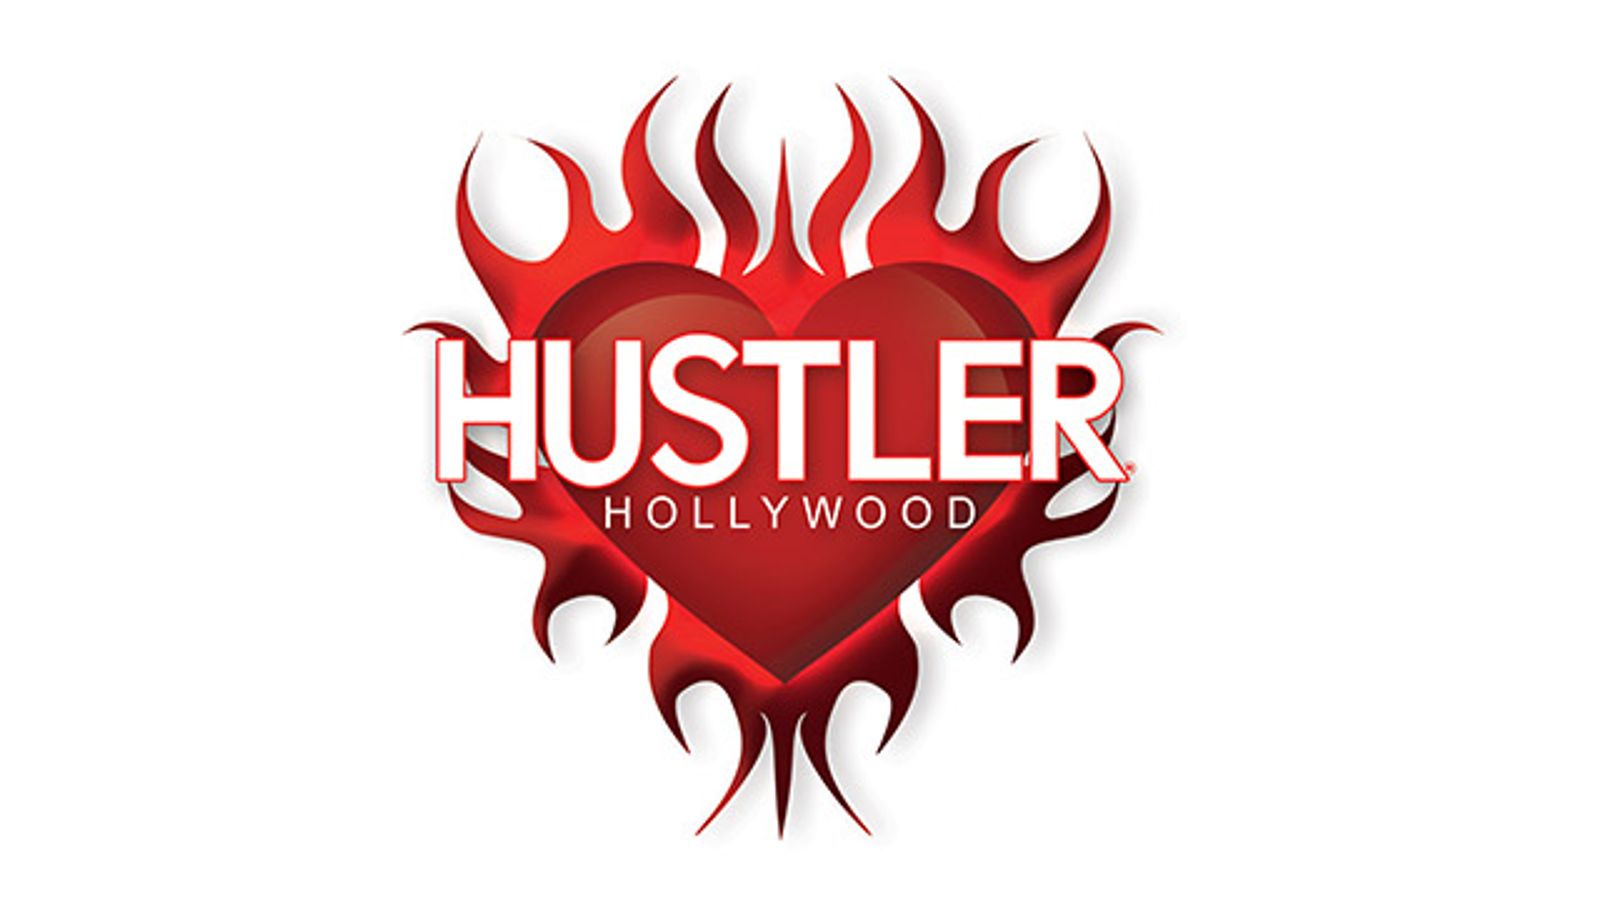 Hustler Hollywood Announces Its 'Passport to Hustler' Event